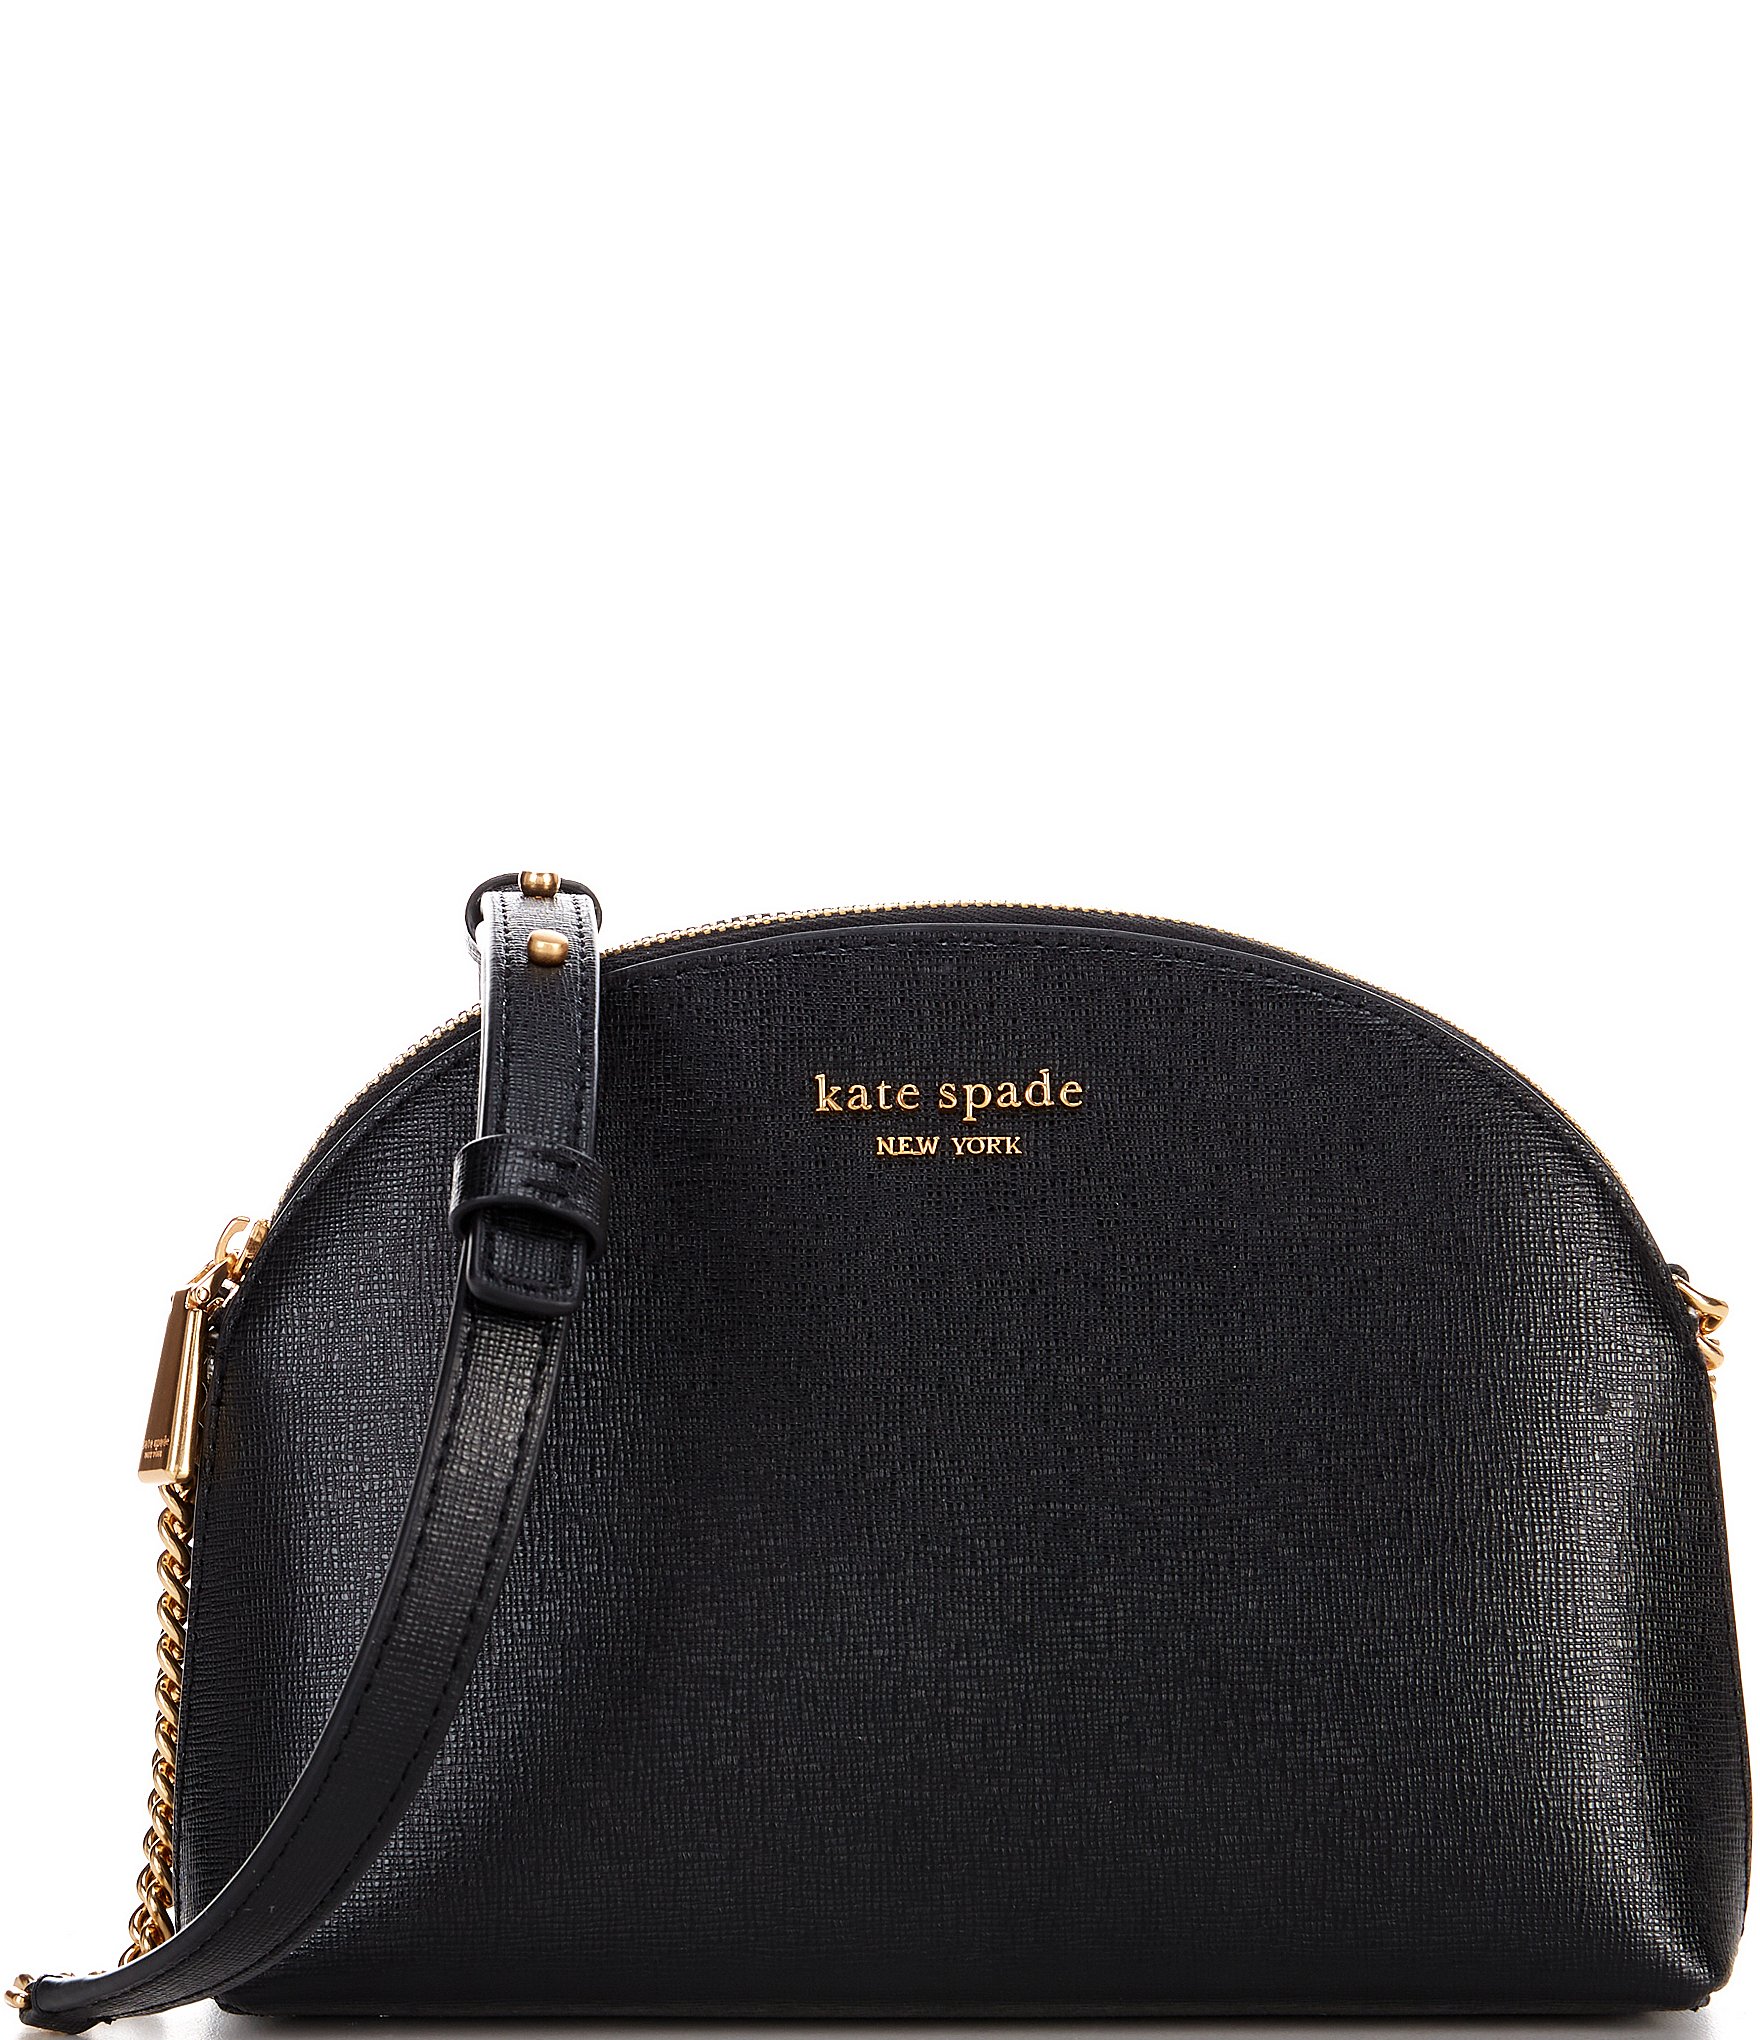 kate spade new york Black Handbags, Purses & Wallets | Dillard's